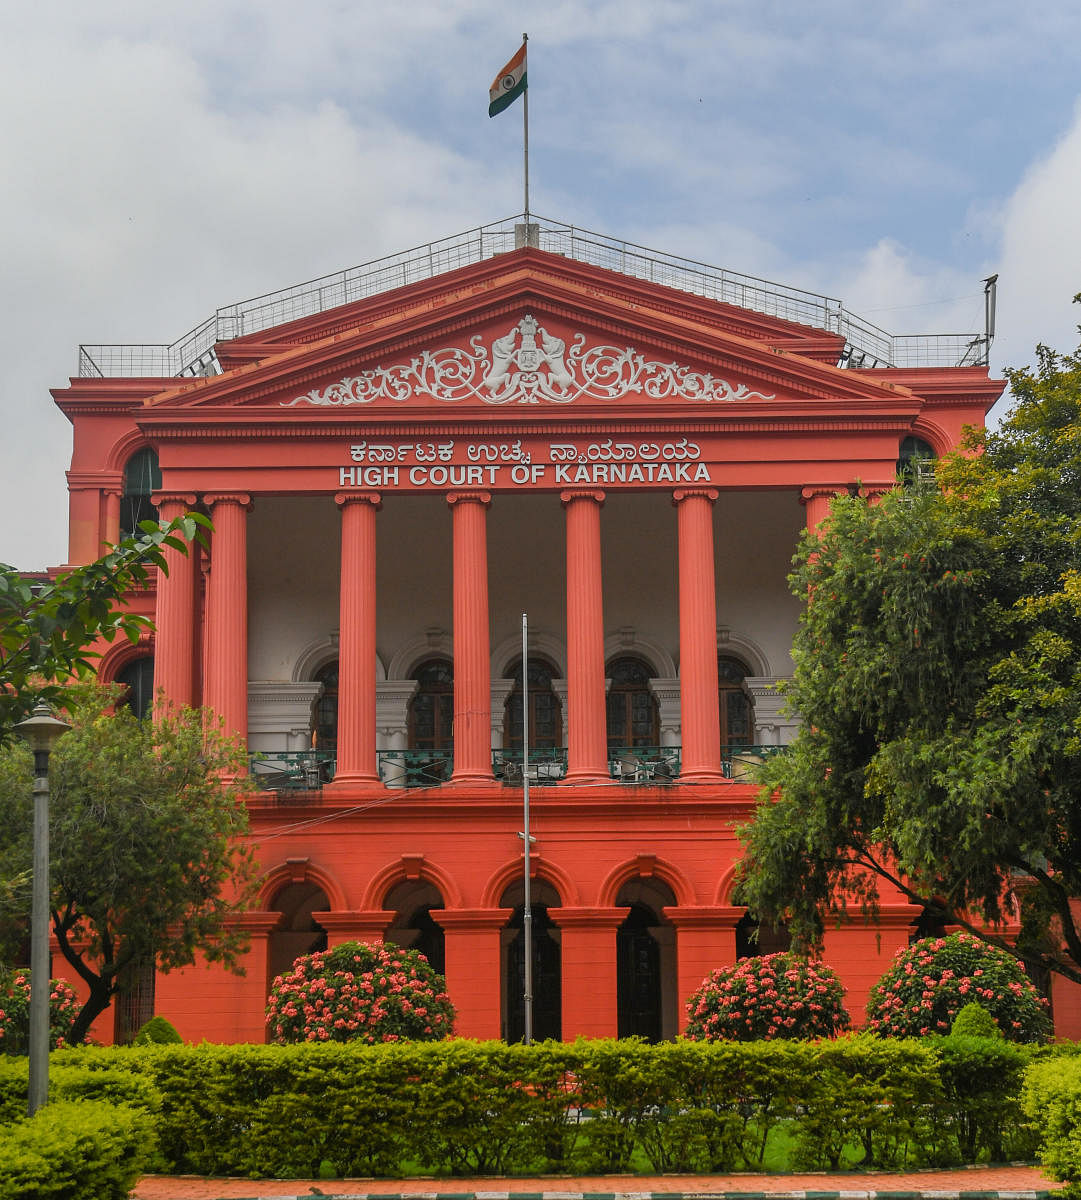 High Court of Karnataka Building in Bengaluru on Saturday, 13th November 2021. Photo by S K Dinesh